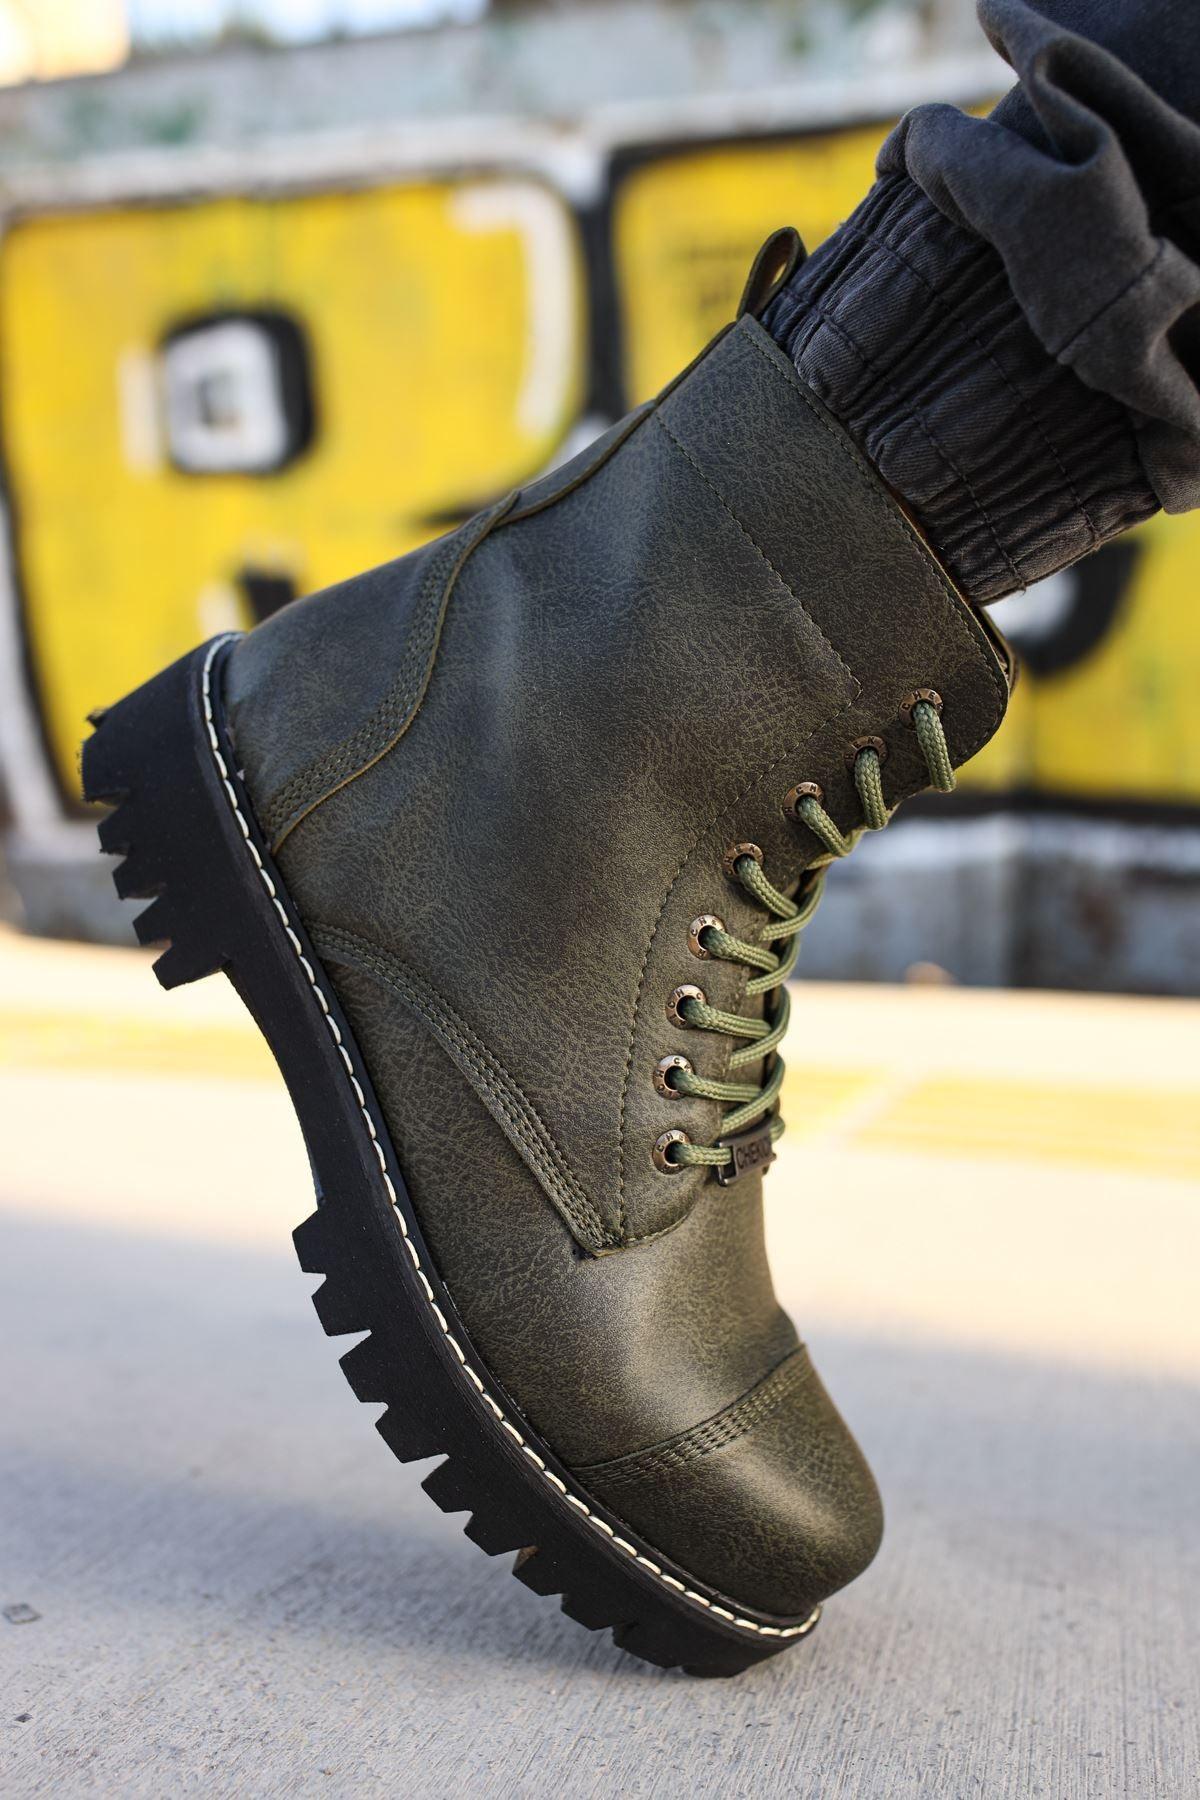 CH009 Men's Leather Khaki-Black Sole Casual Winter Boots - STREET MODE ™